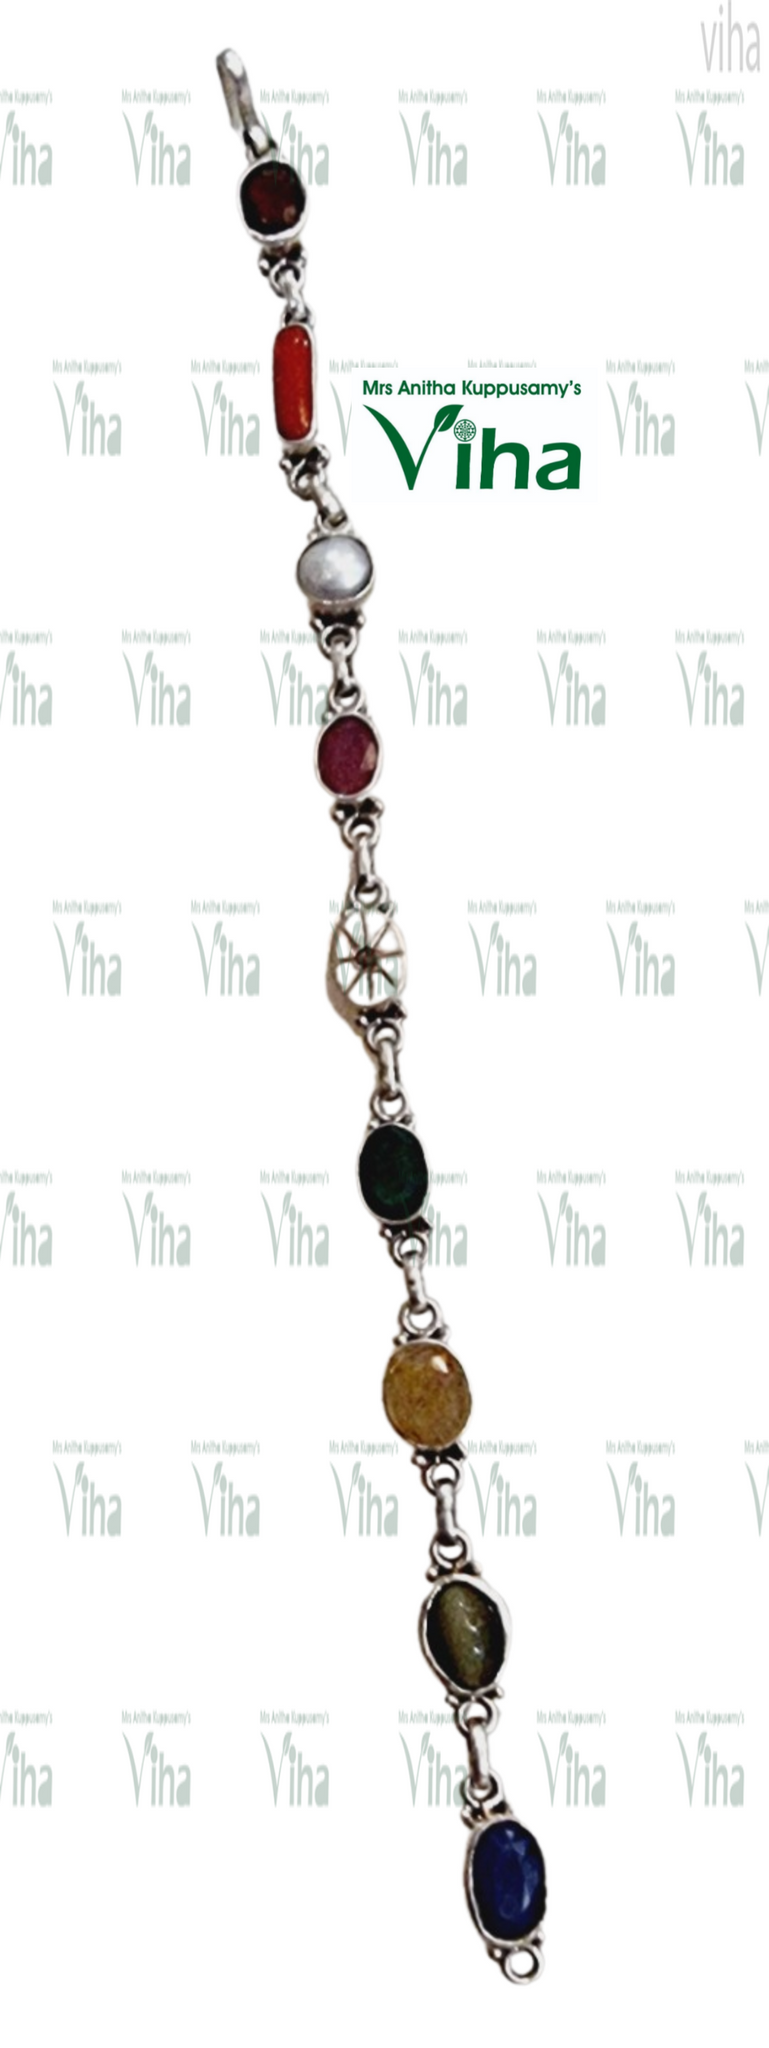 Blog | Top 5 Ways to Wear Navaratna Jewellery